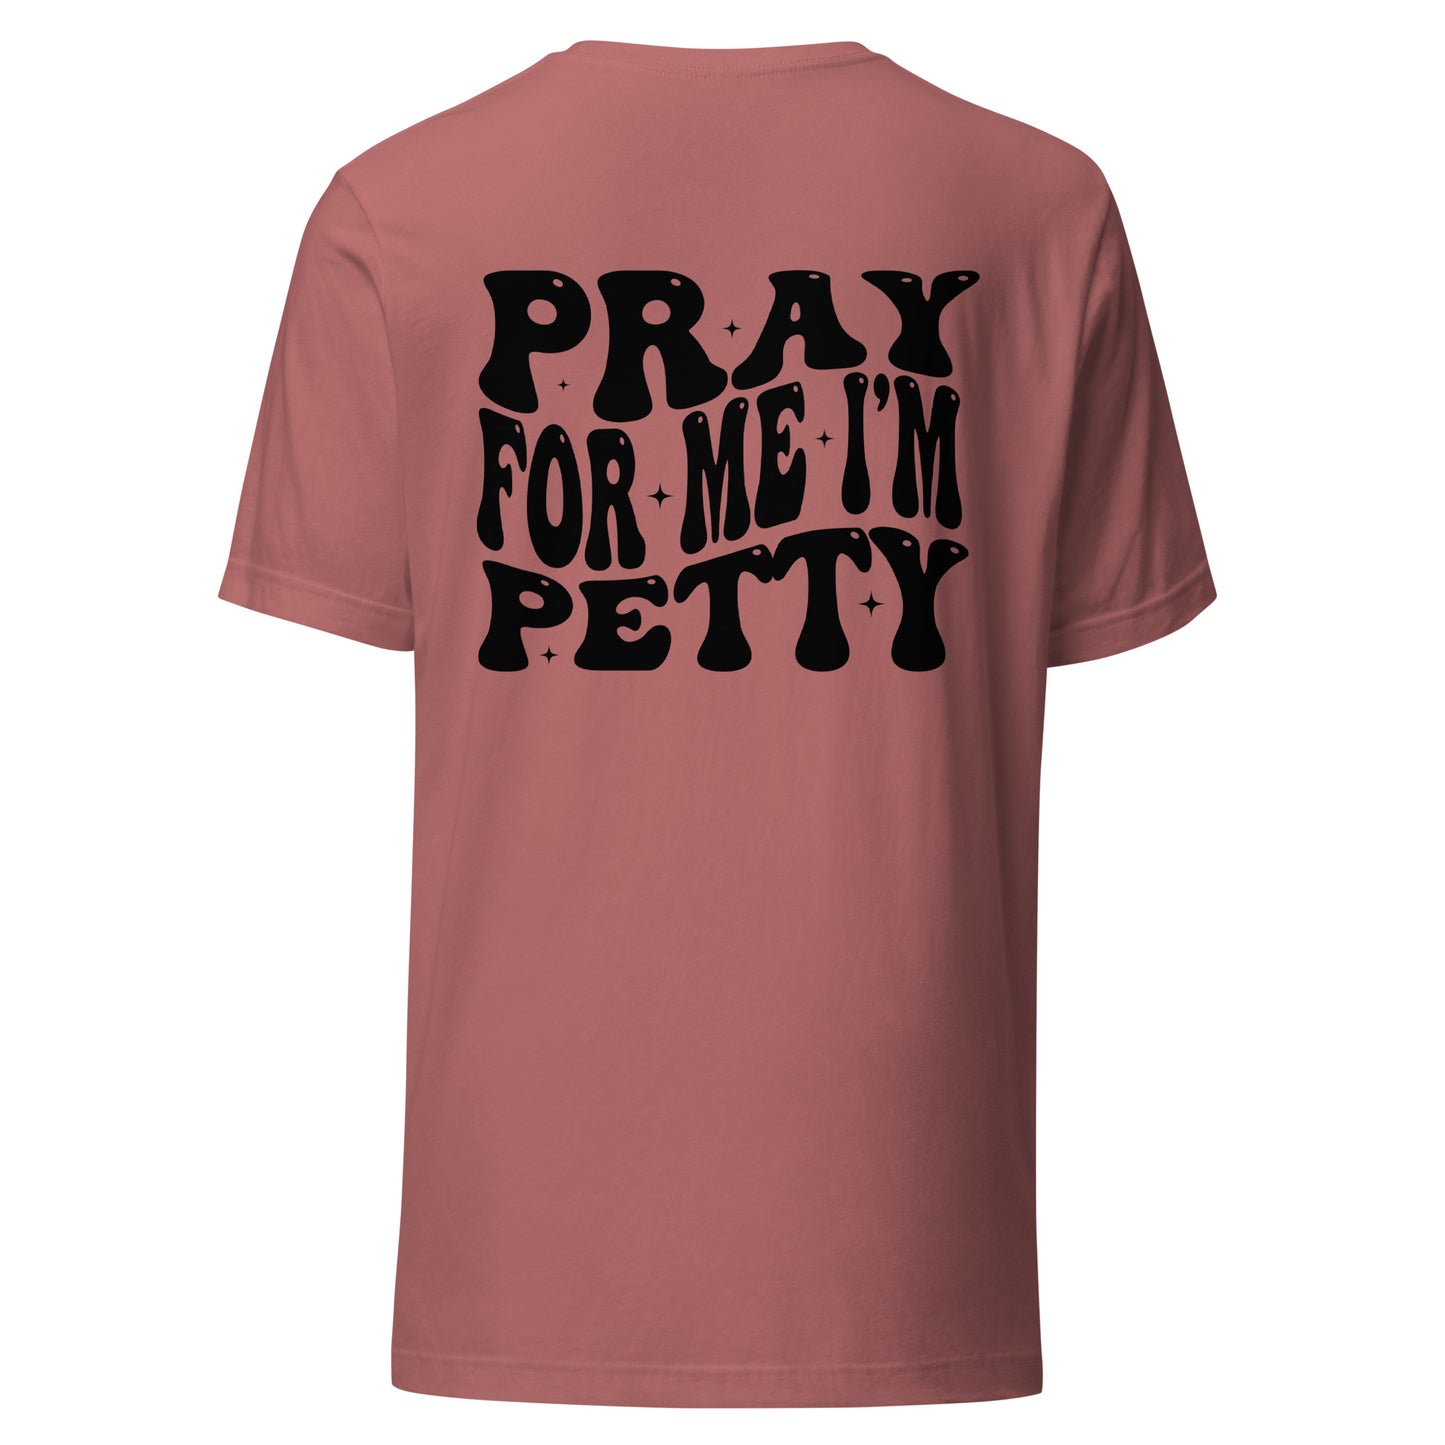 Pray for me t-shirt